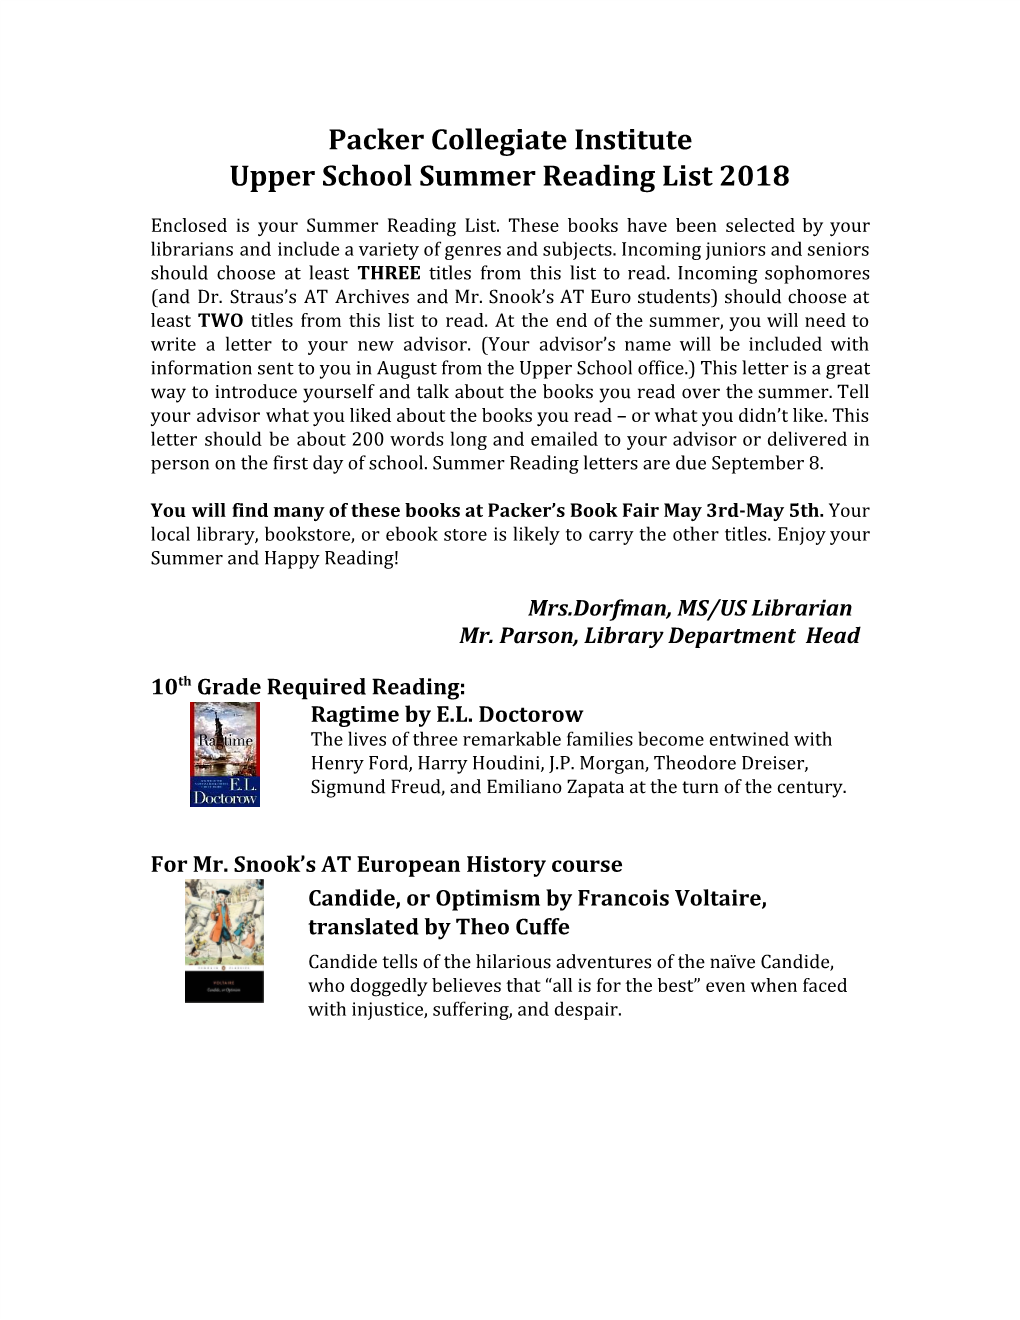 Packer Collegiate Institute Upper School Summer Reading List 2018